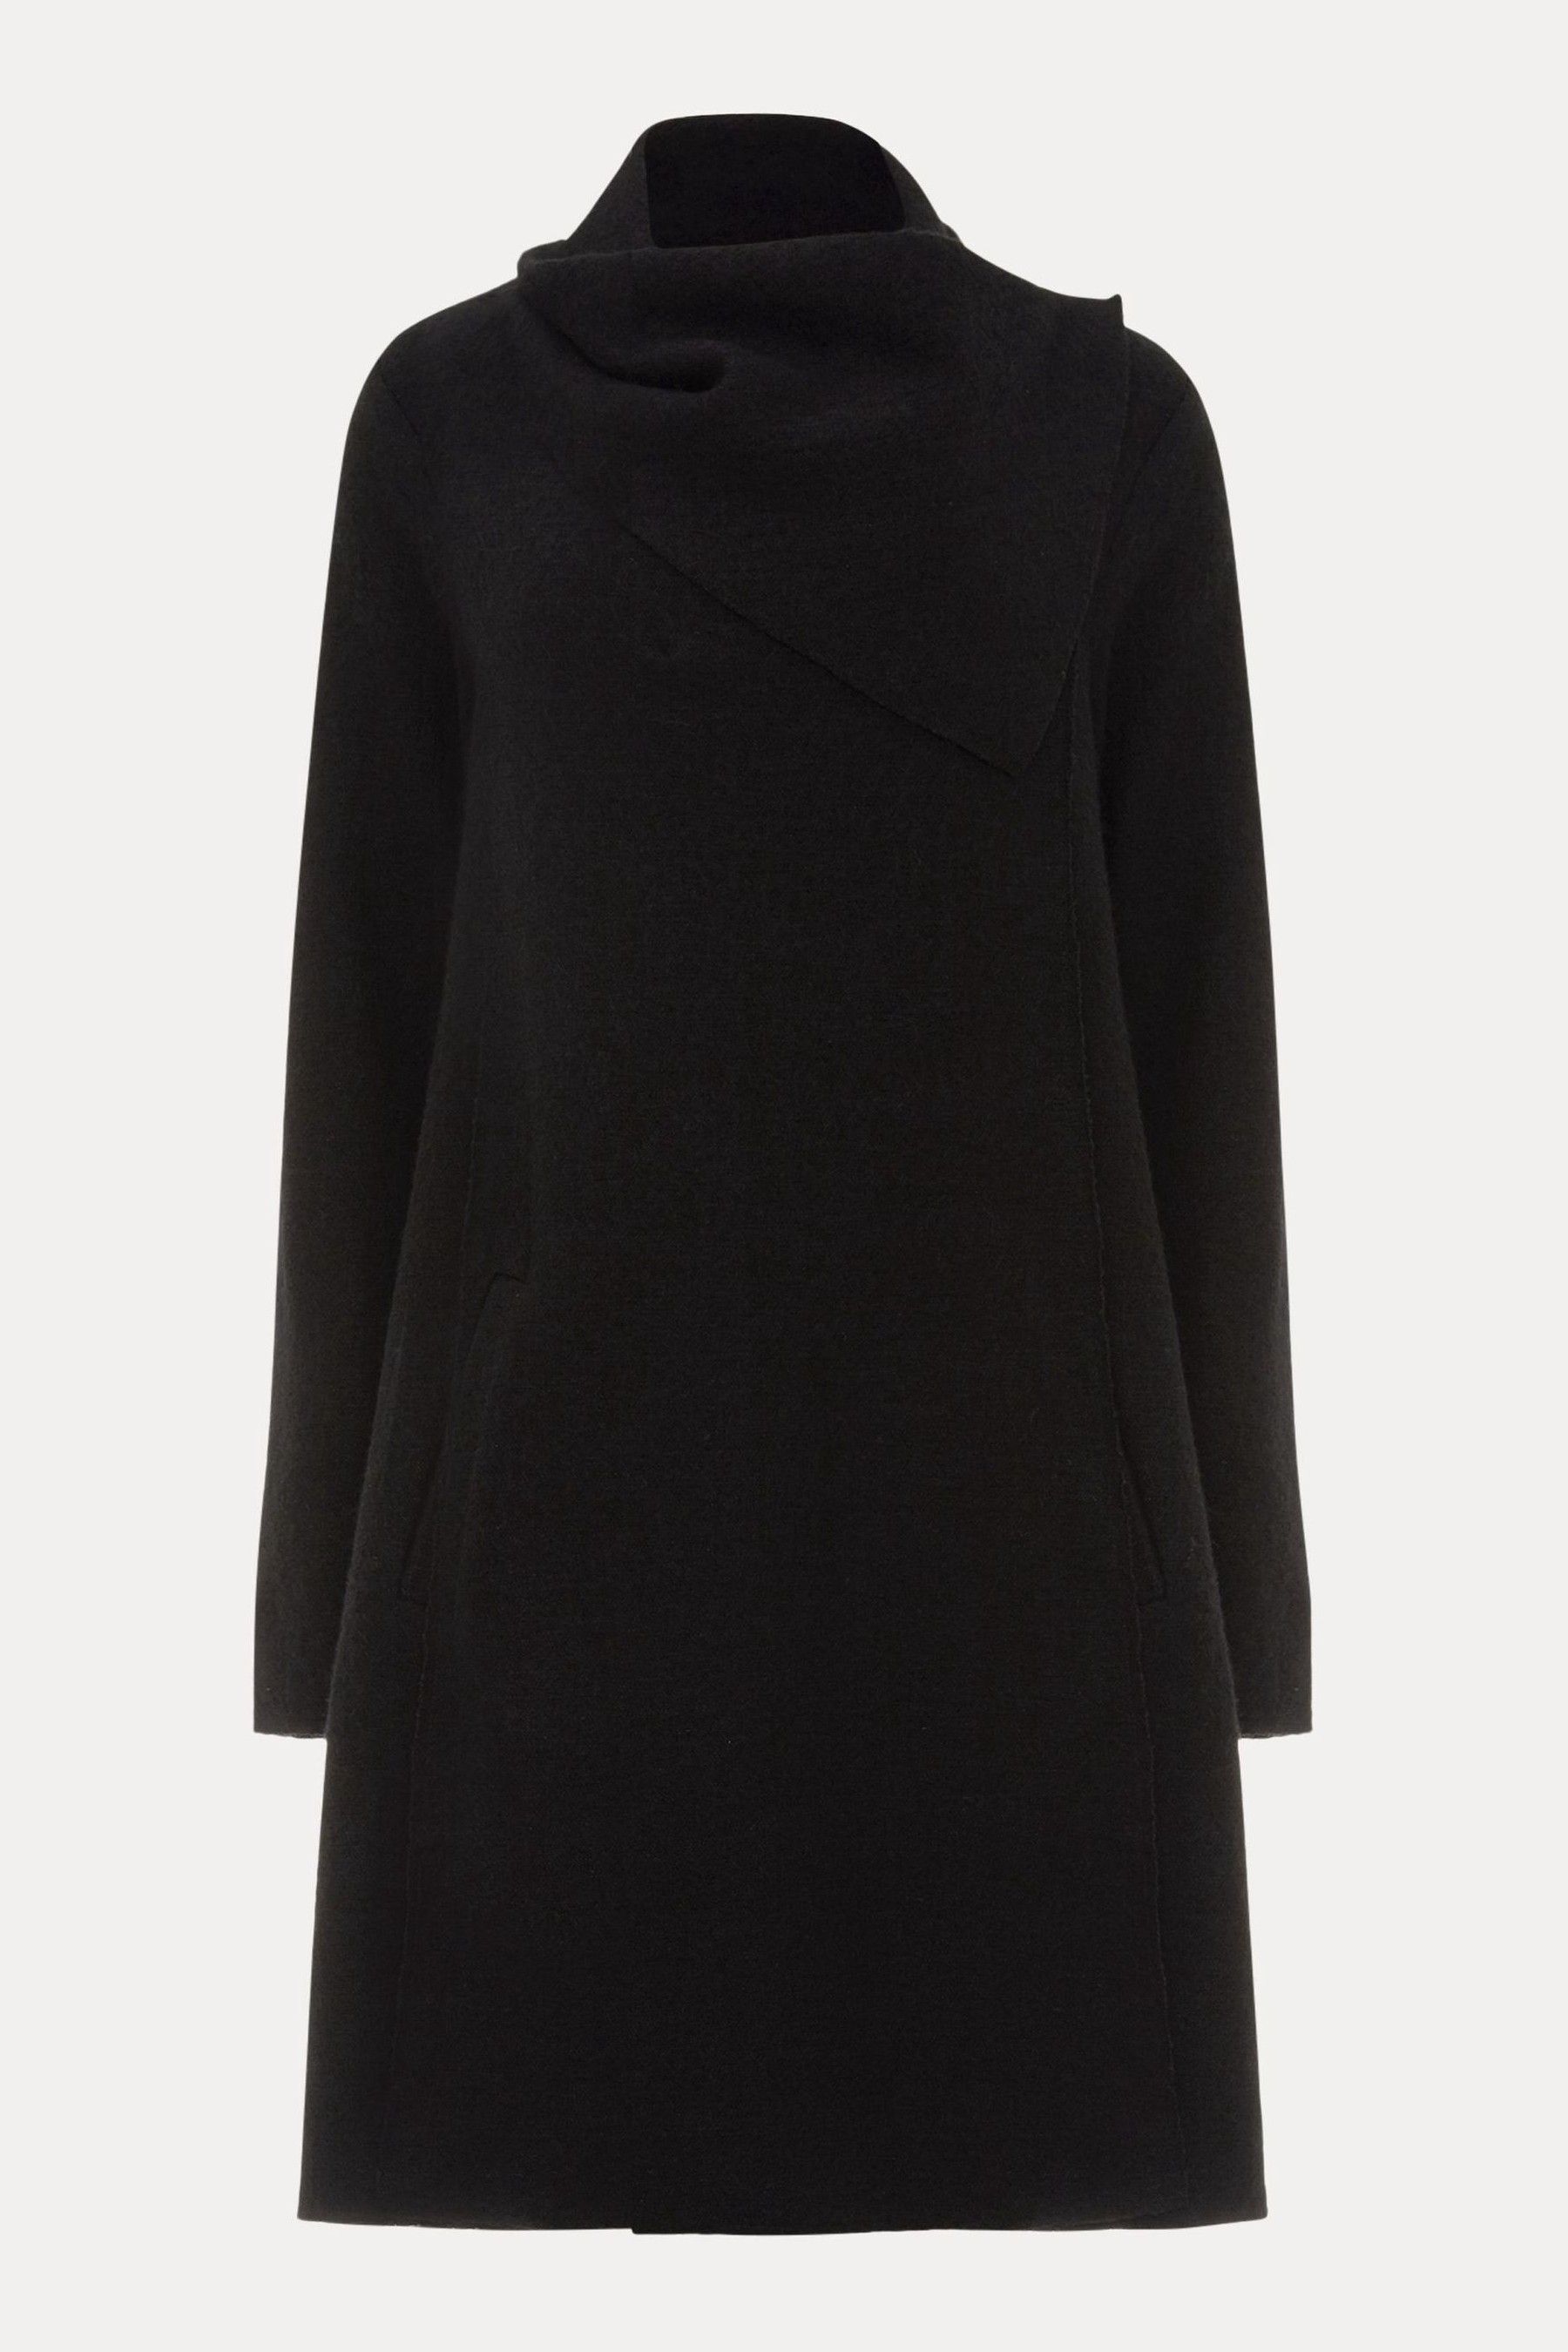 Buy Phase Eight Bellona Black Knit Coat from Next Ireland